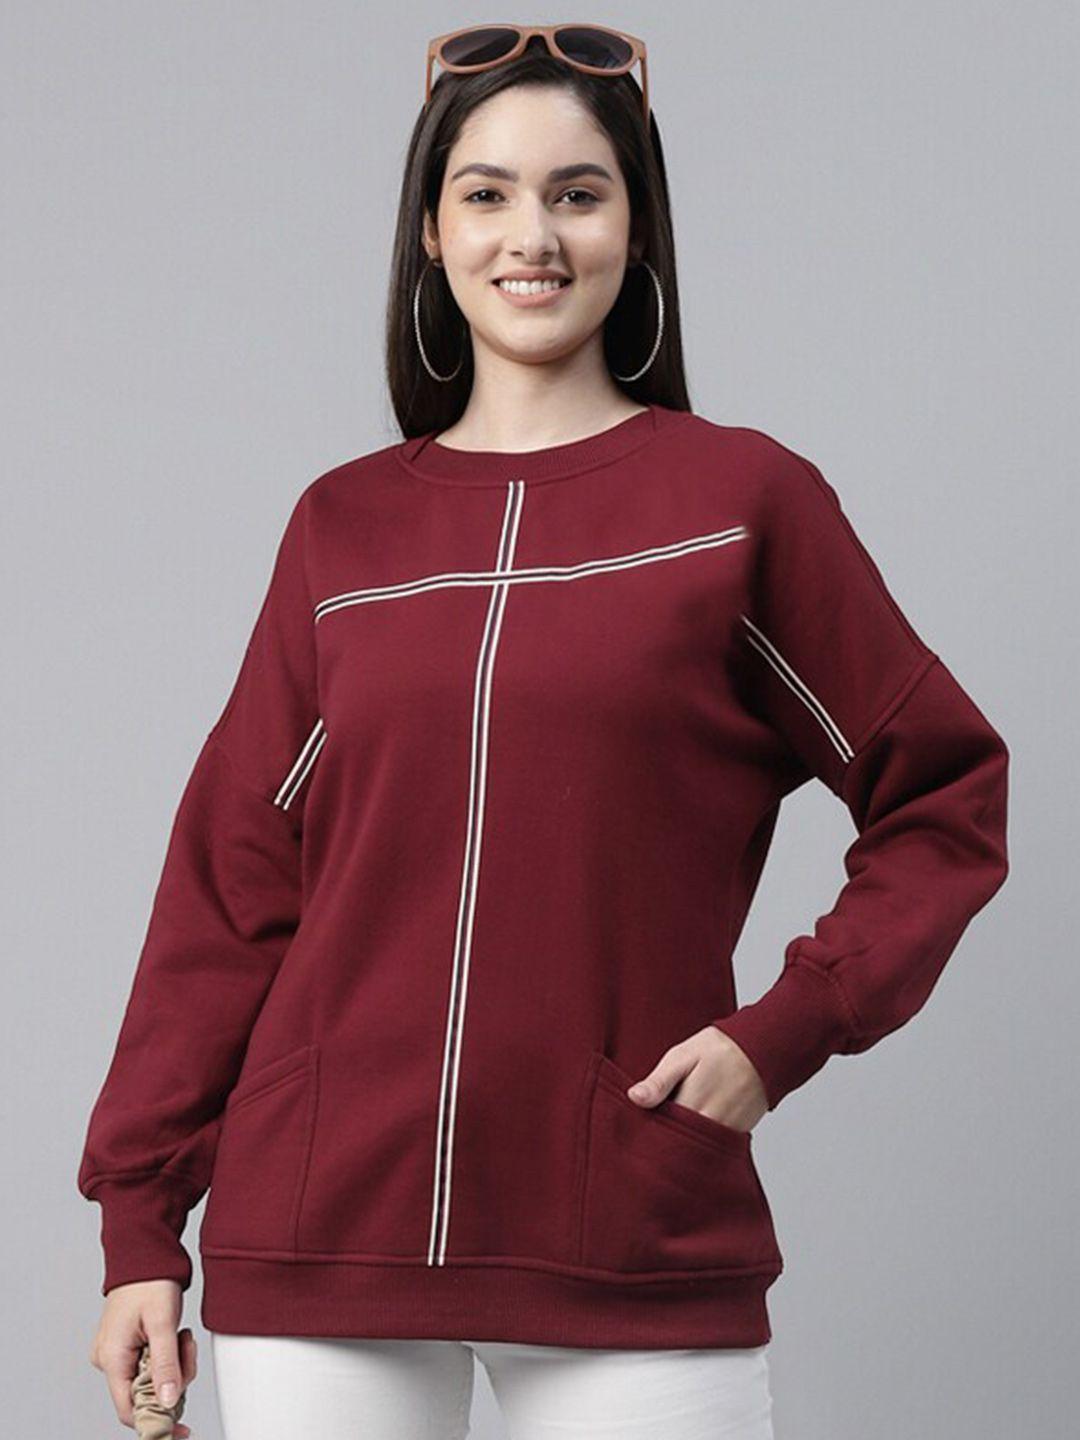 taurus women maroon sweatshirt